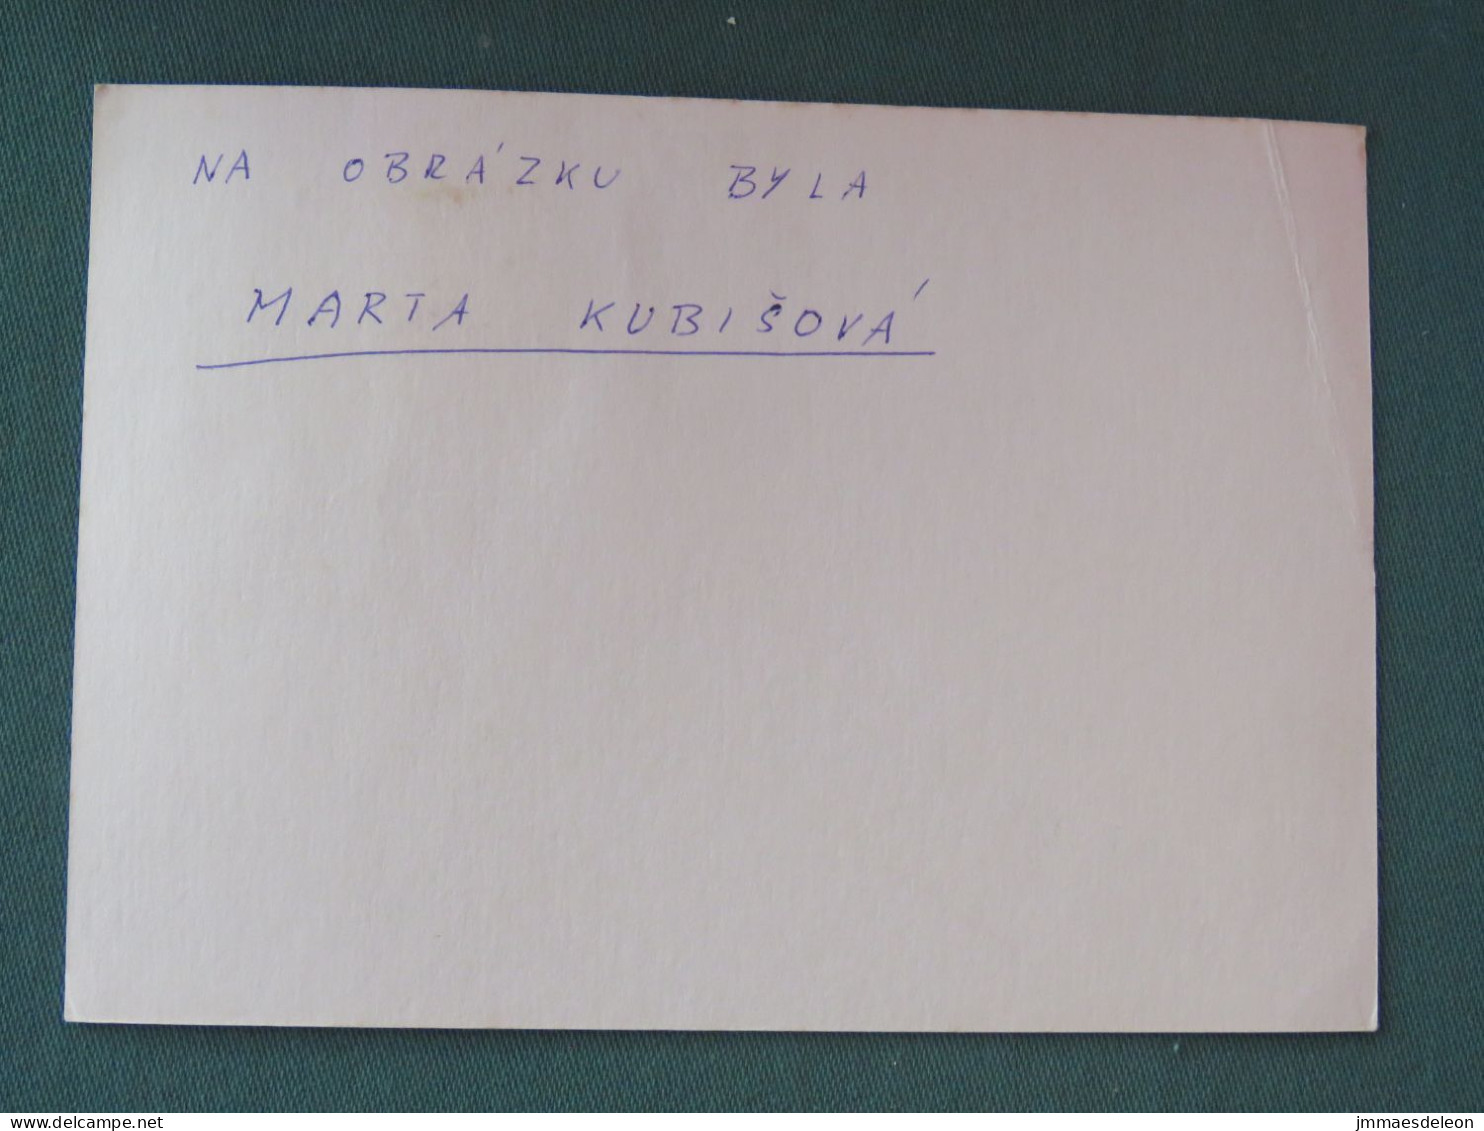 Czech Republic 1995 Stationery Postcard Hora Rip Mountain Sent Locally - Brieven En Documenten